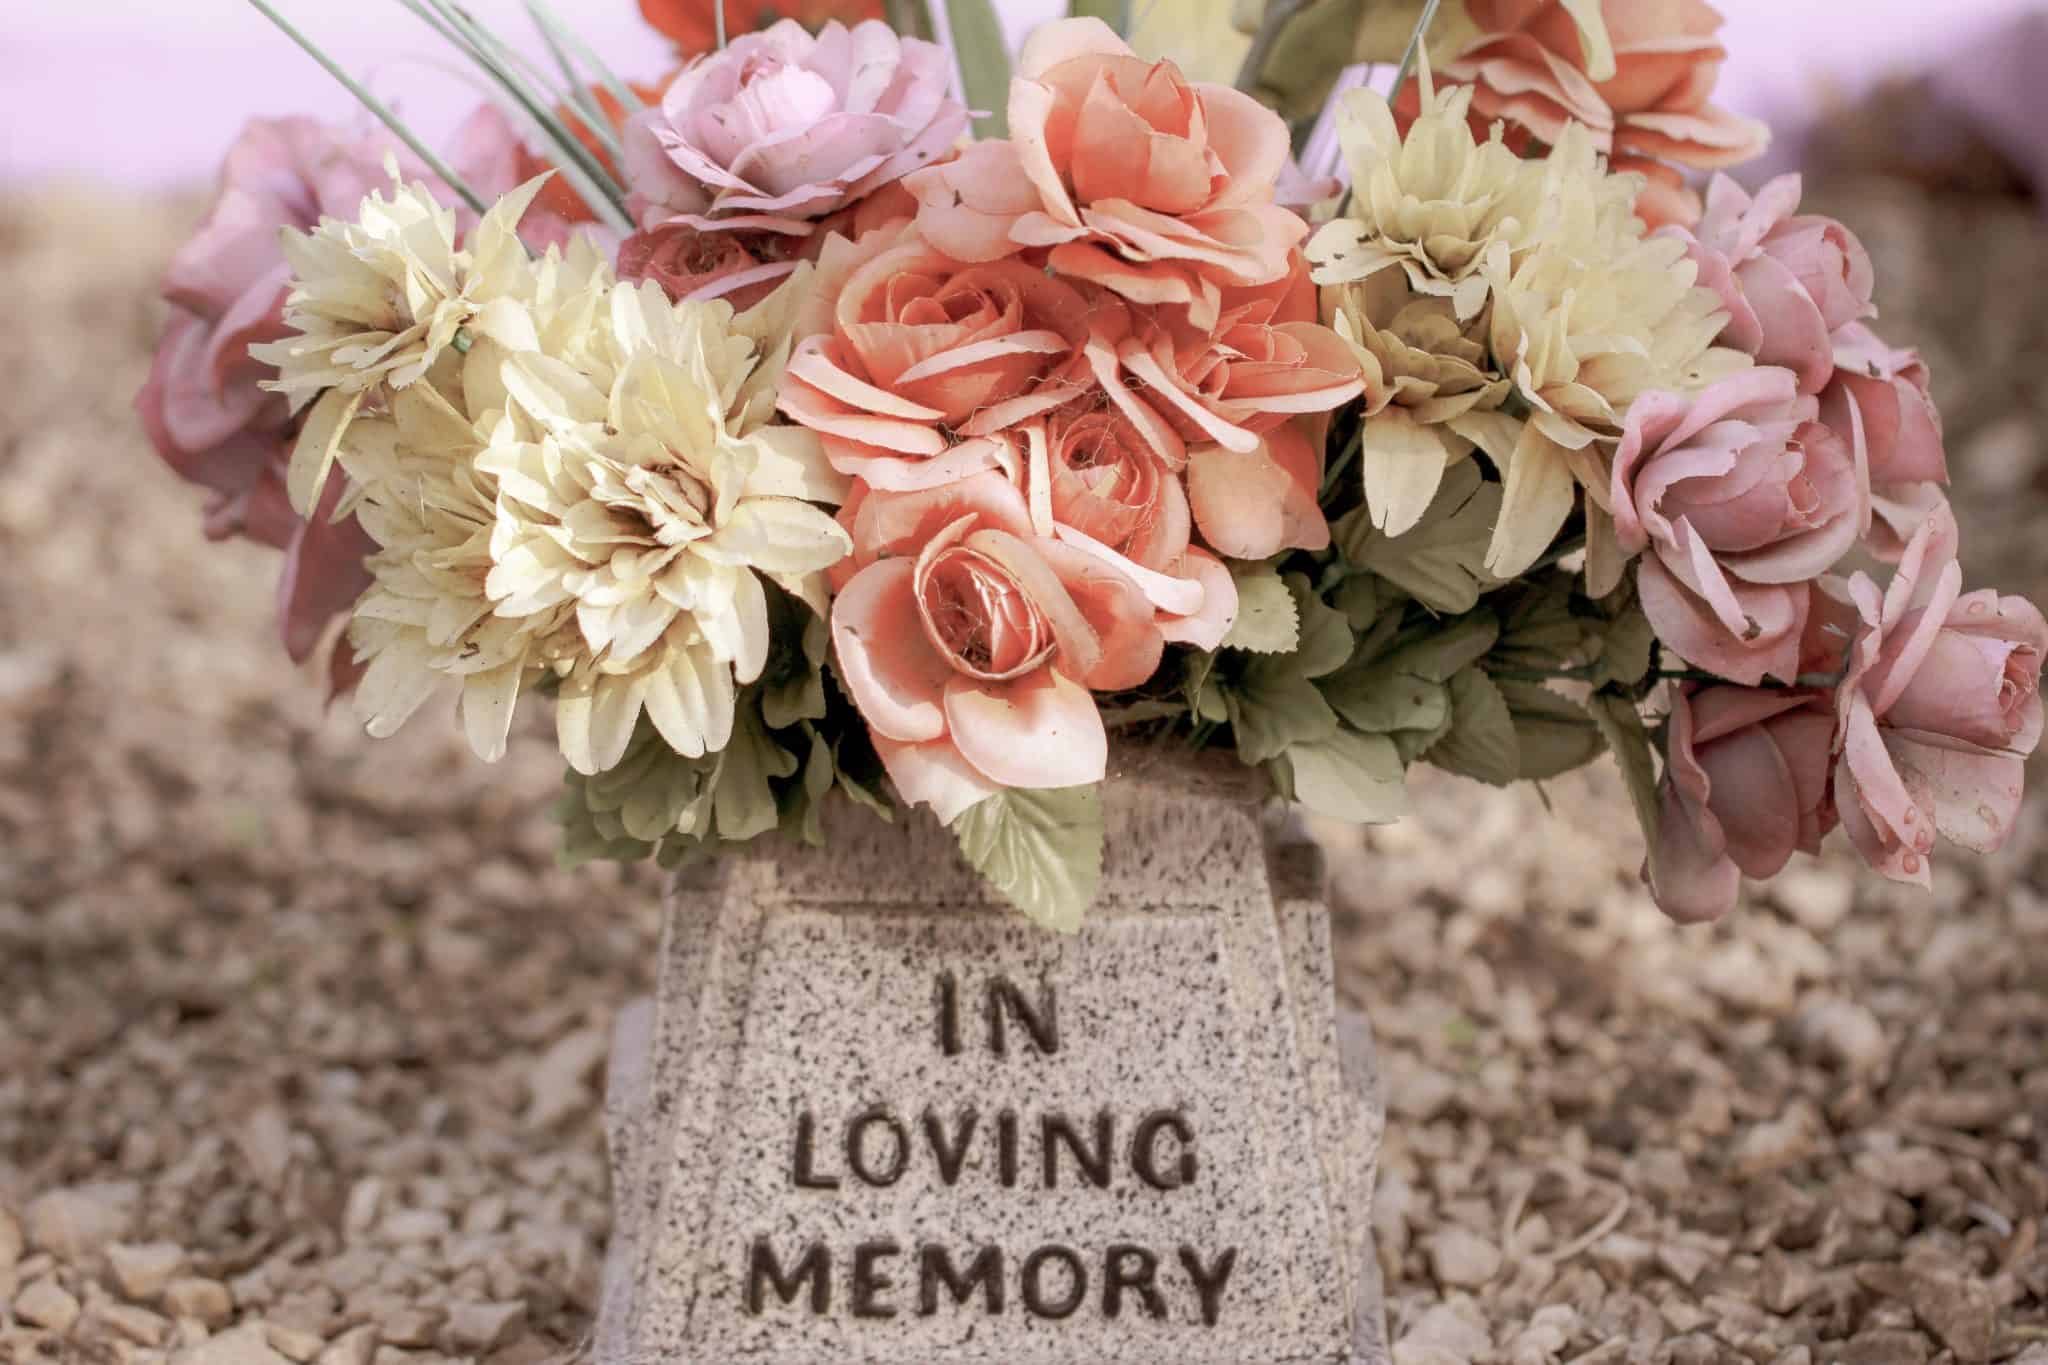 In Loving Memory memorial with flowers